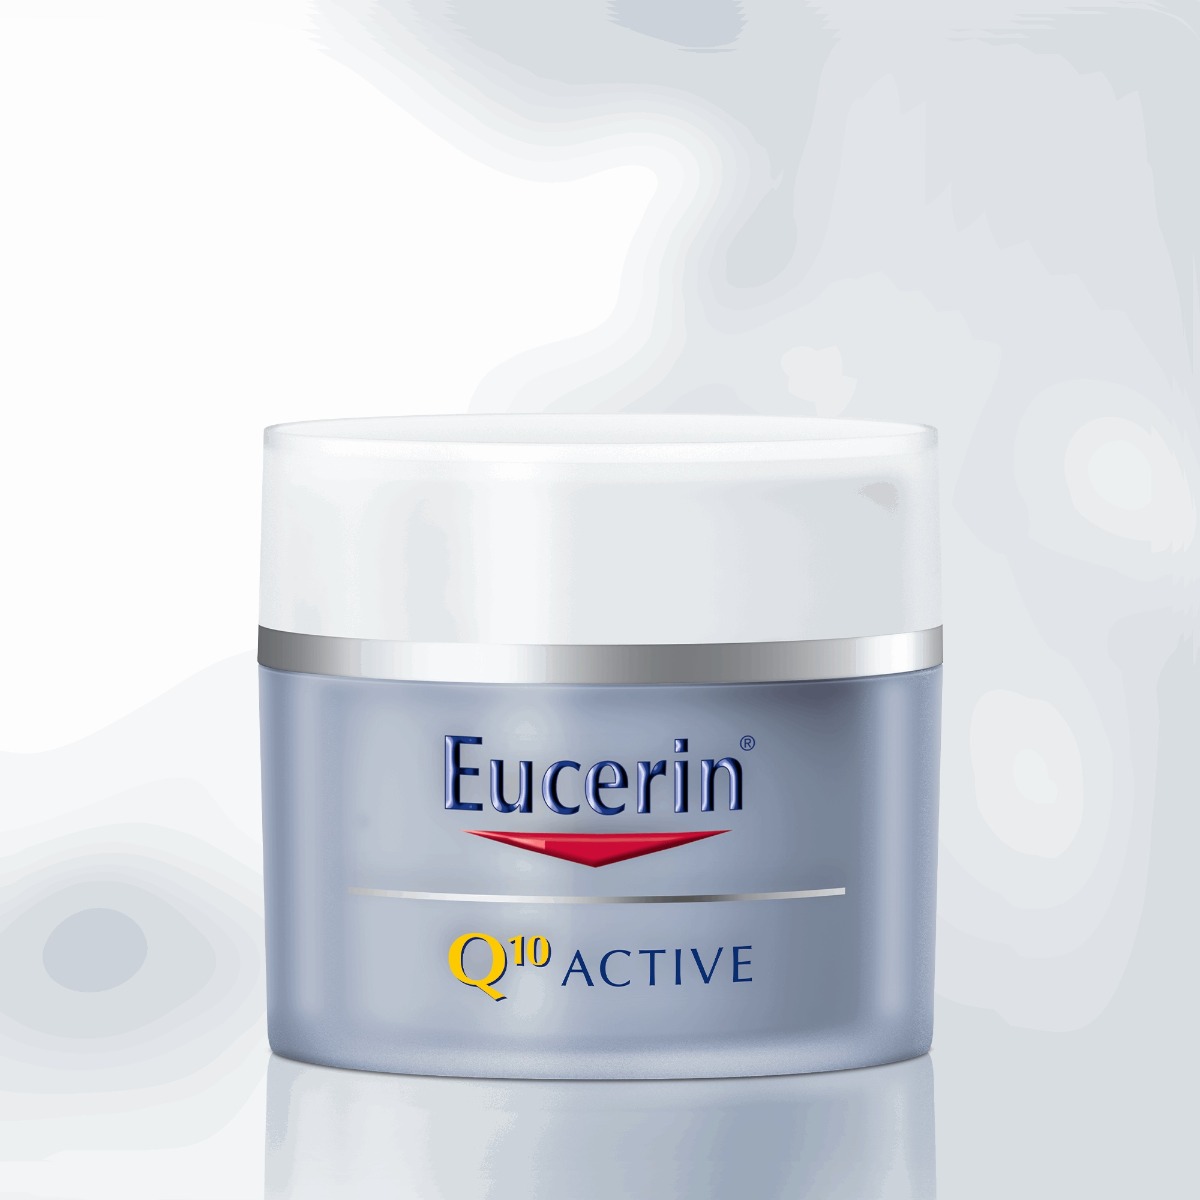 Kem dưỡng da ban ngày Eucerin Q10 Active ngăn ngừa lão hoá 50ml